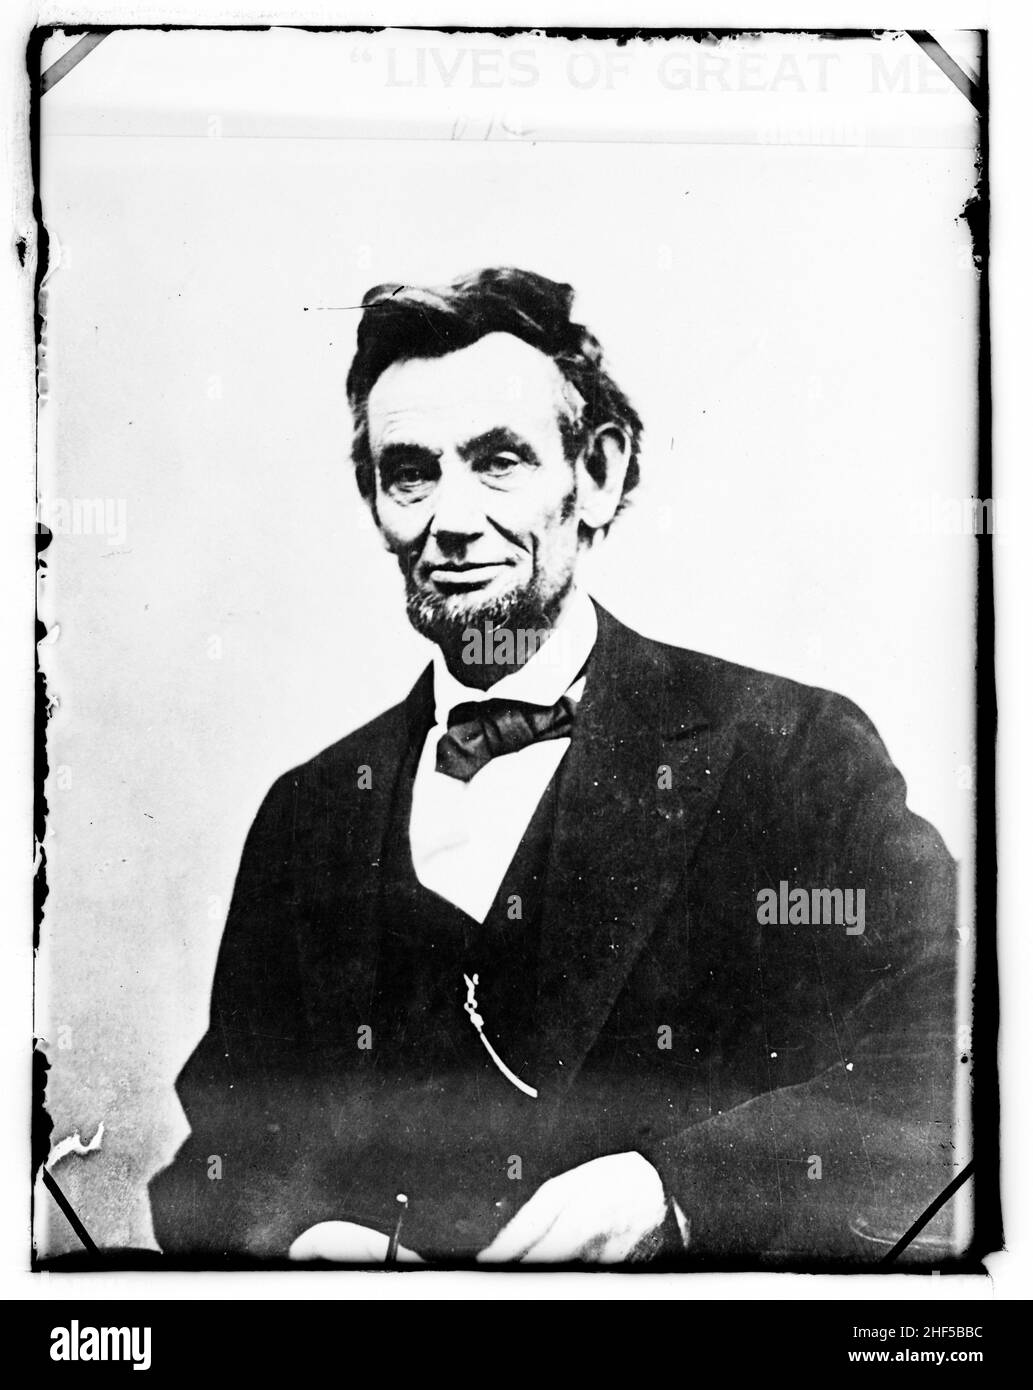 Abraham 'Abe' Lincoln 1809-1865 by Gardner, Alexander, 1821-1882. Publ. 1920. Stock Photo